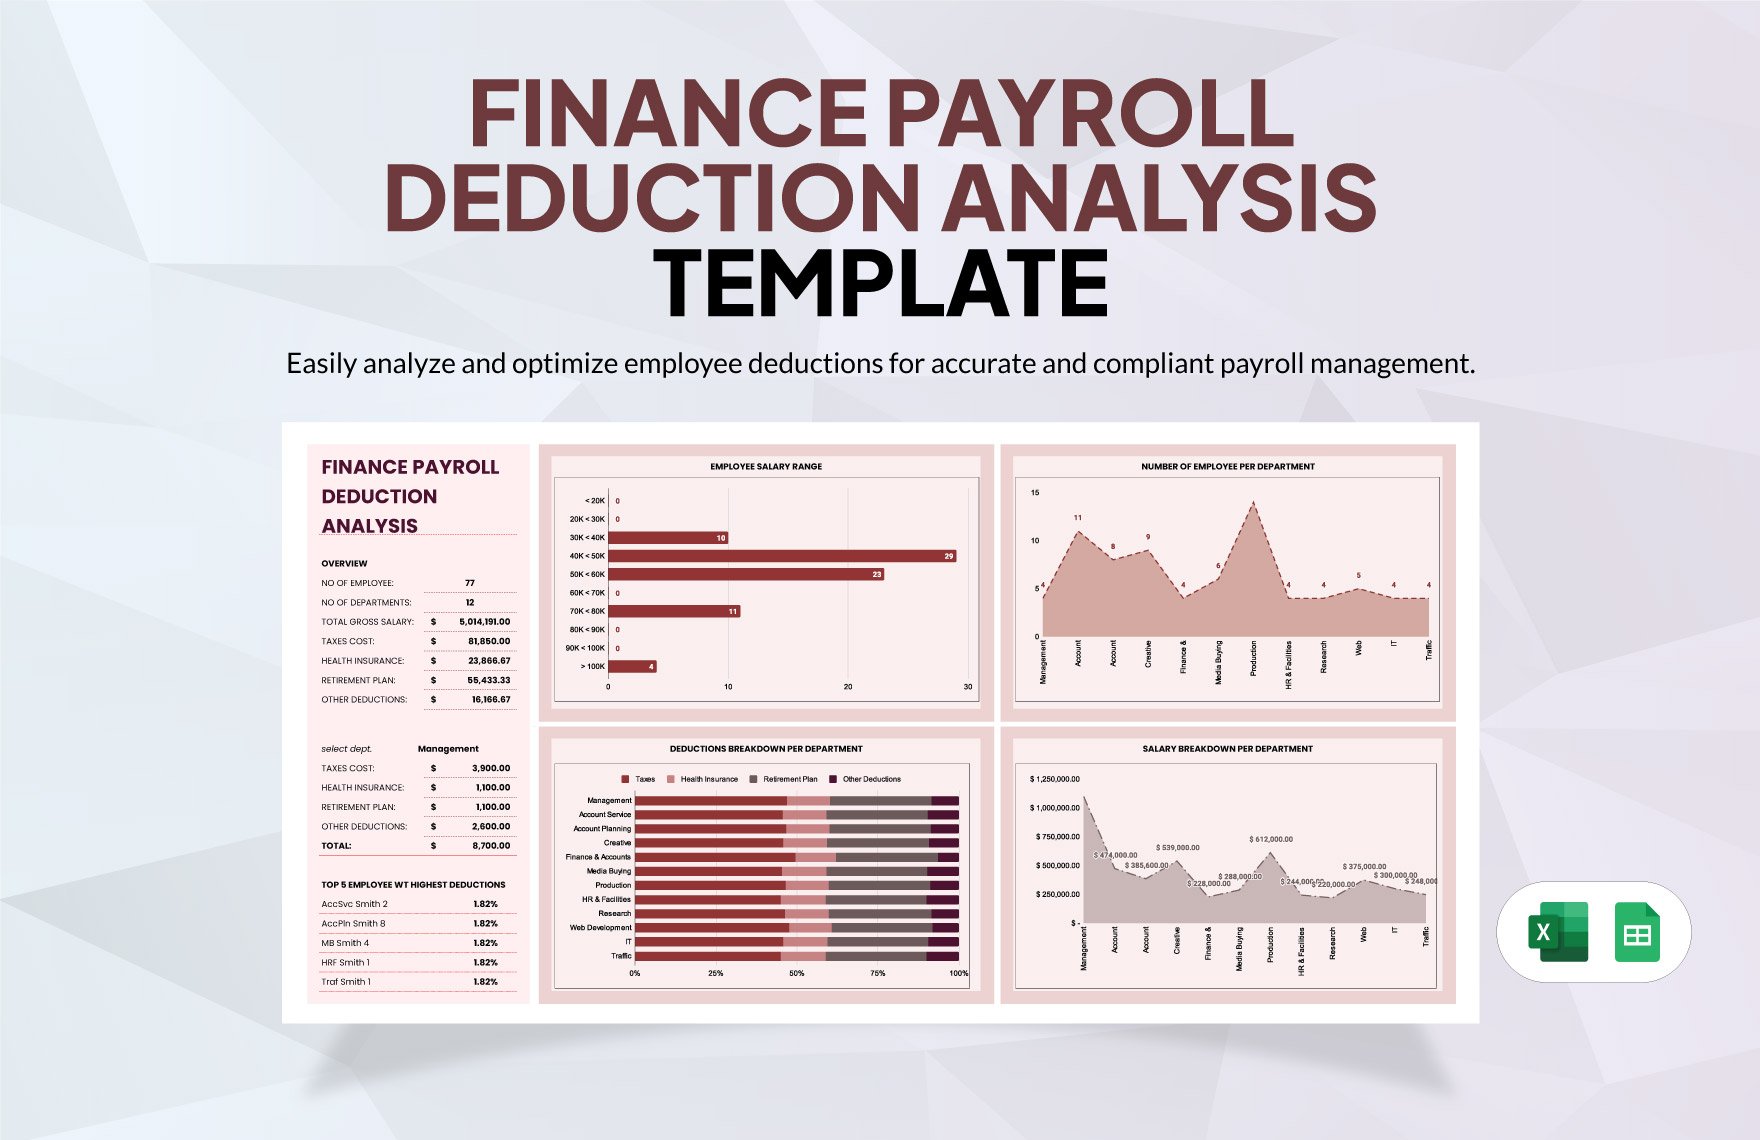 Finance Payroll Deduction Analysis Template